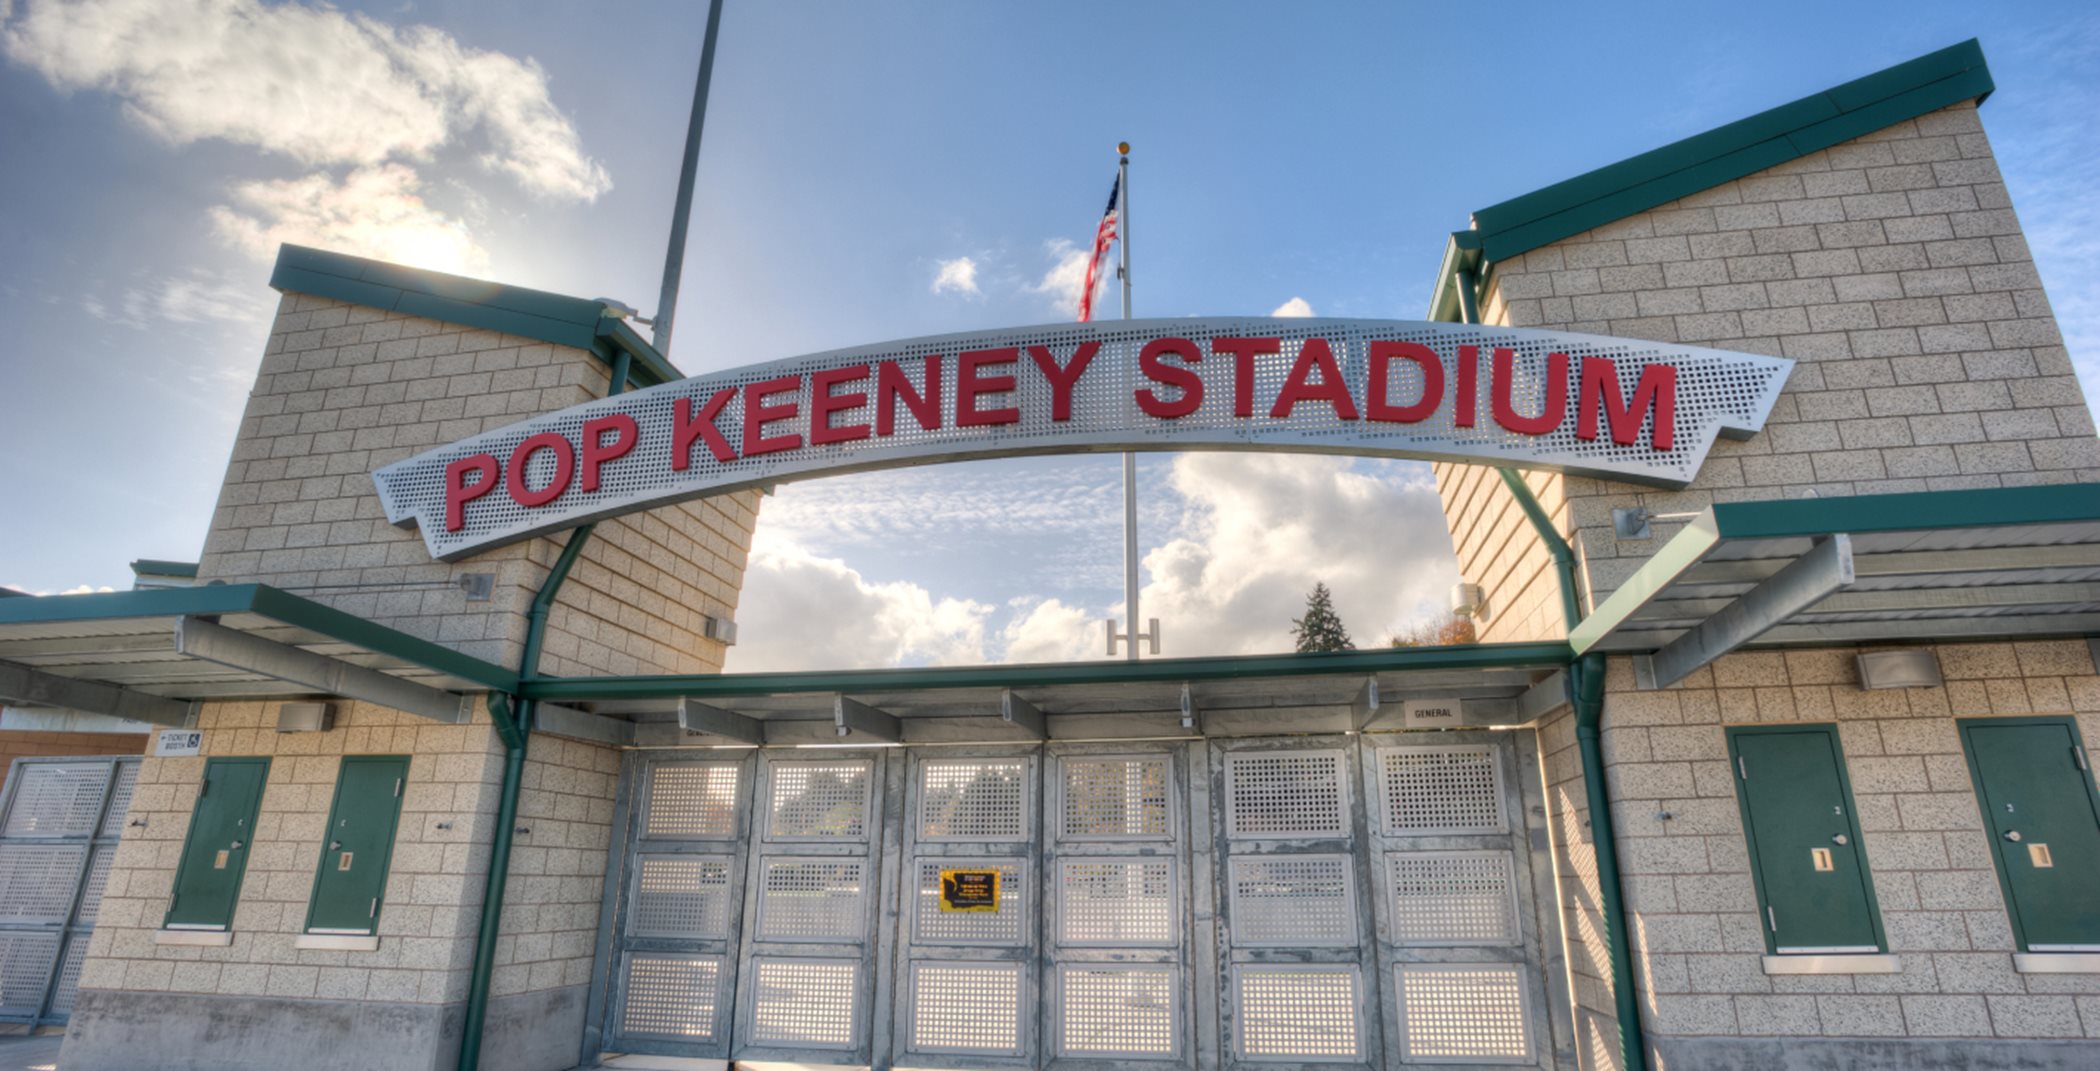 Pop Keeney Stadium entrance